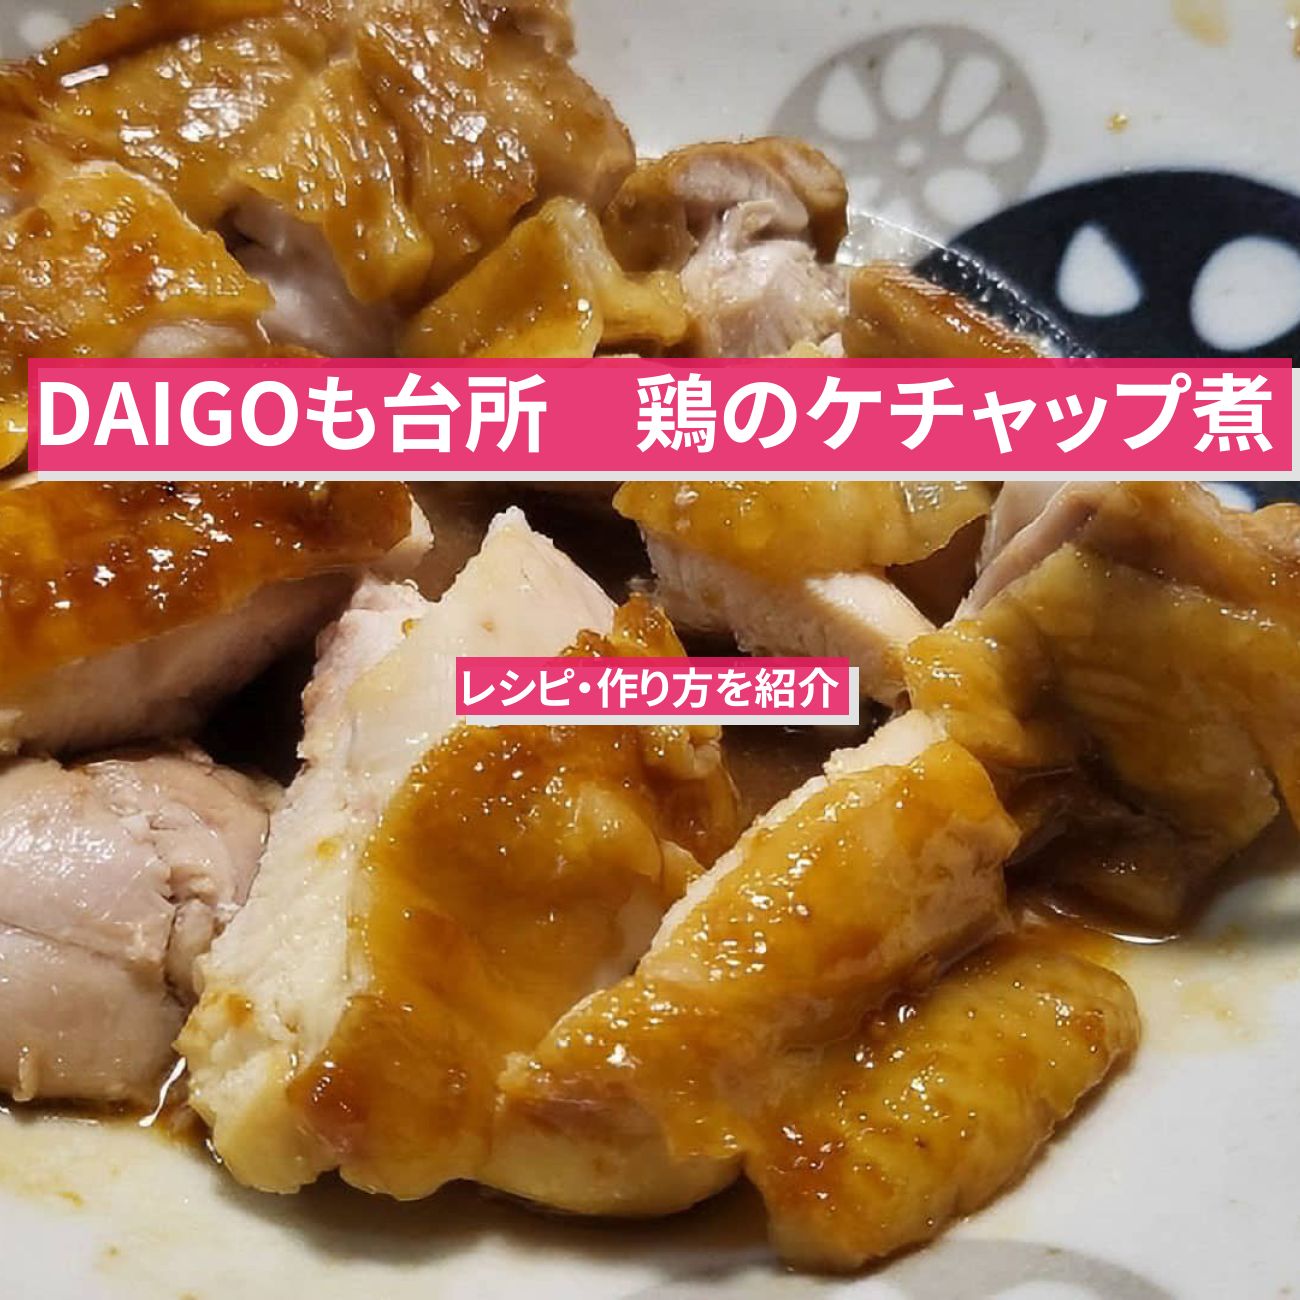 【DAIGOも台所】『鶏のケチャップ煮』のレシピ・作り方を紹介〔ダイゴも台所〕